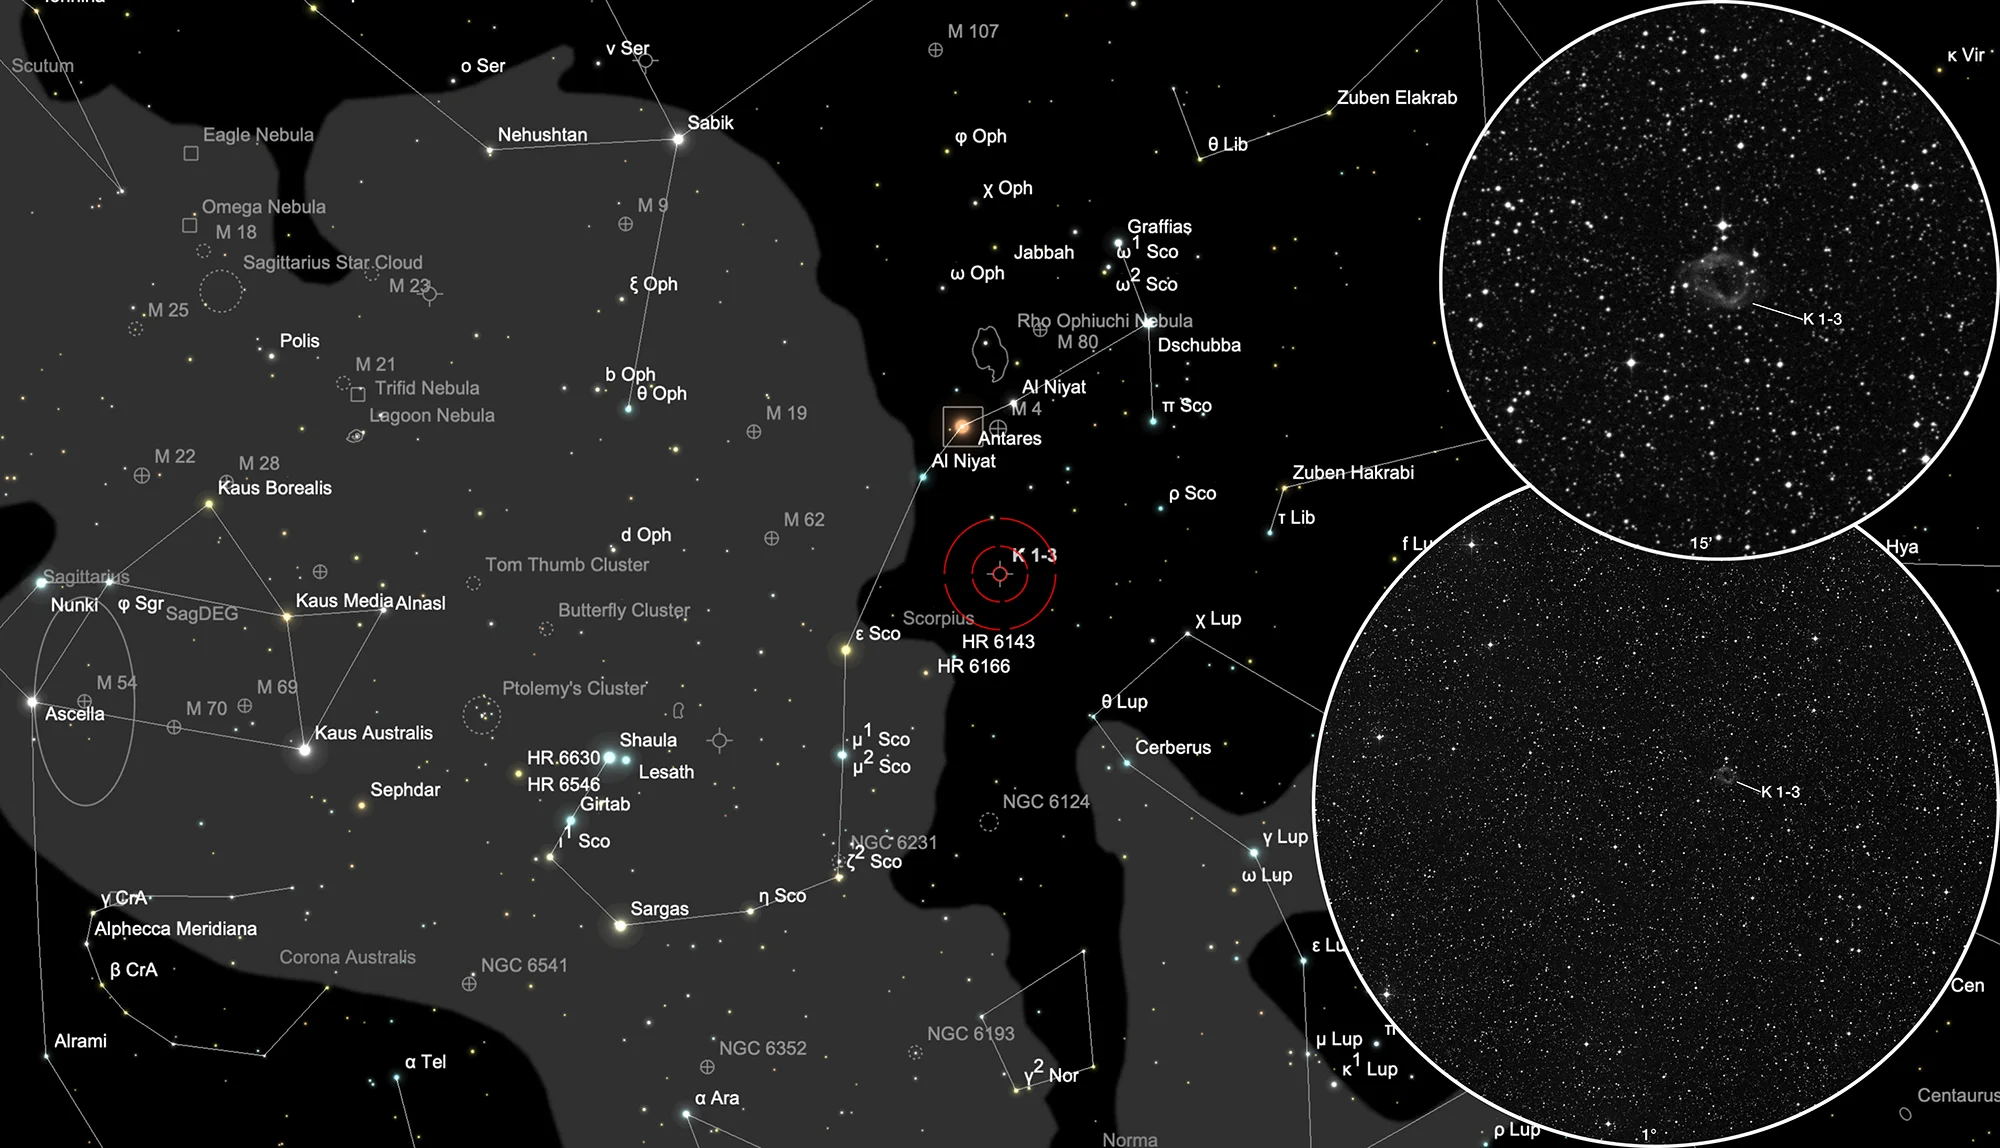 Finder Chart Planetary Nebula Kohoutek 1-3 (Abell 38)